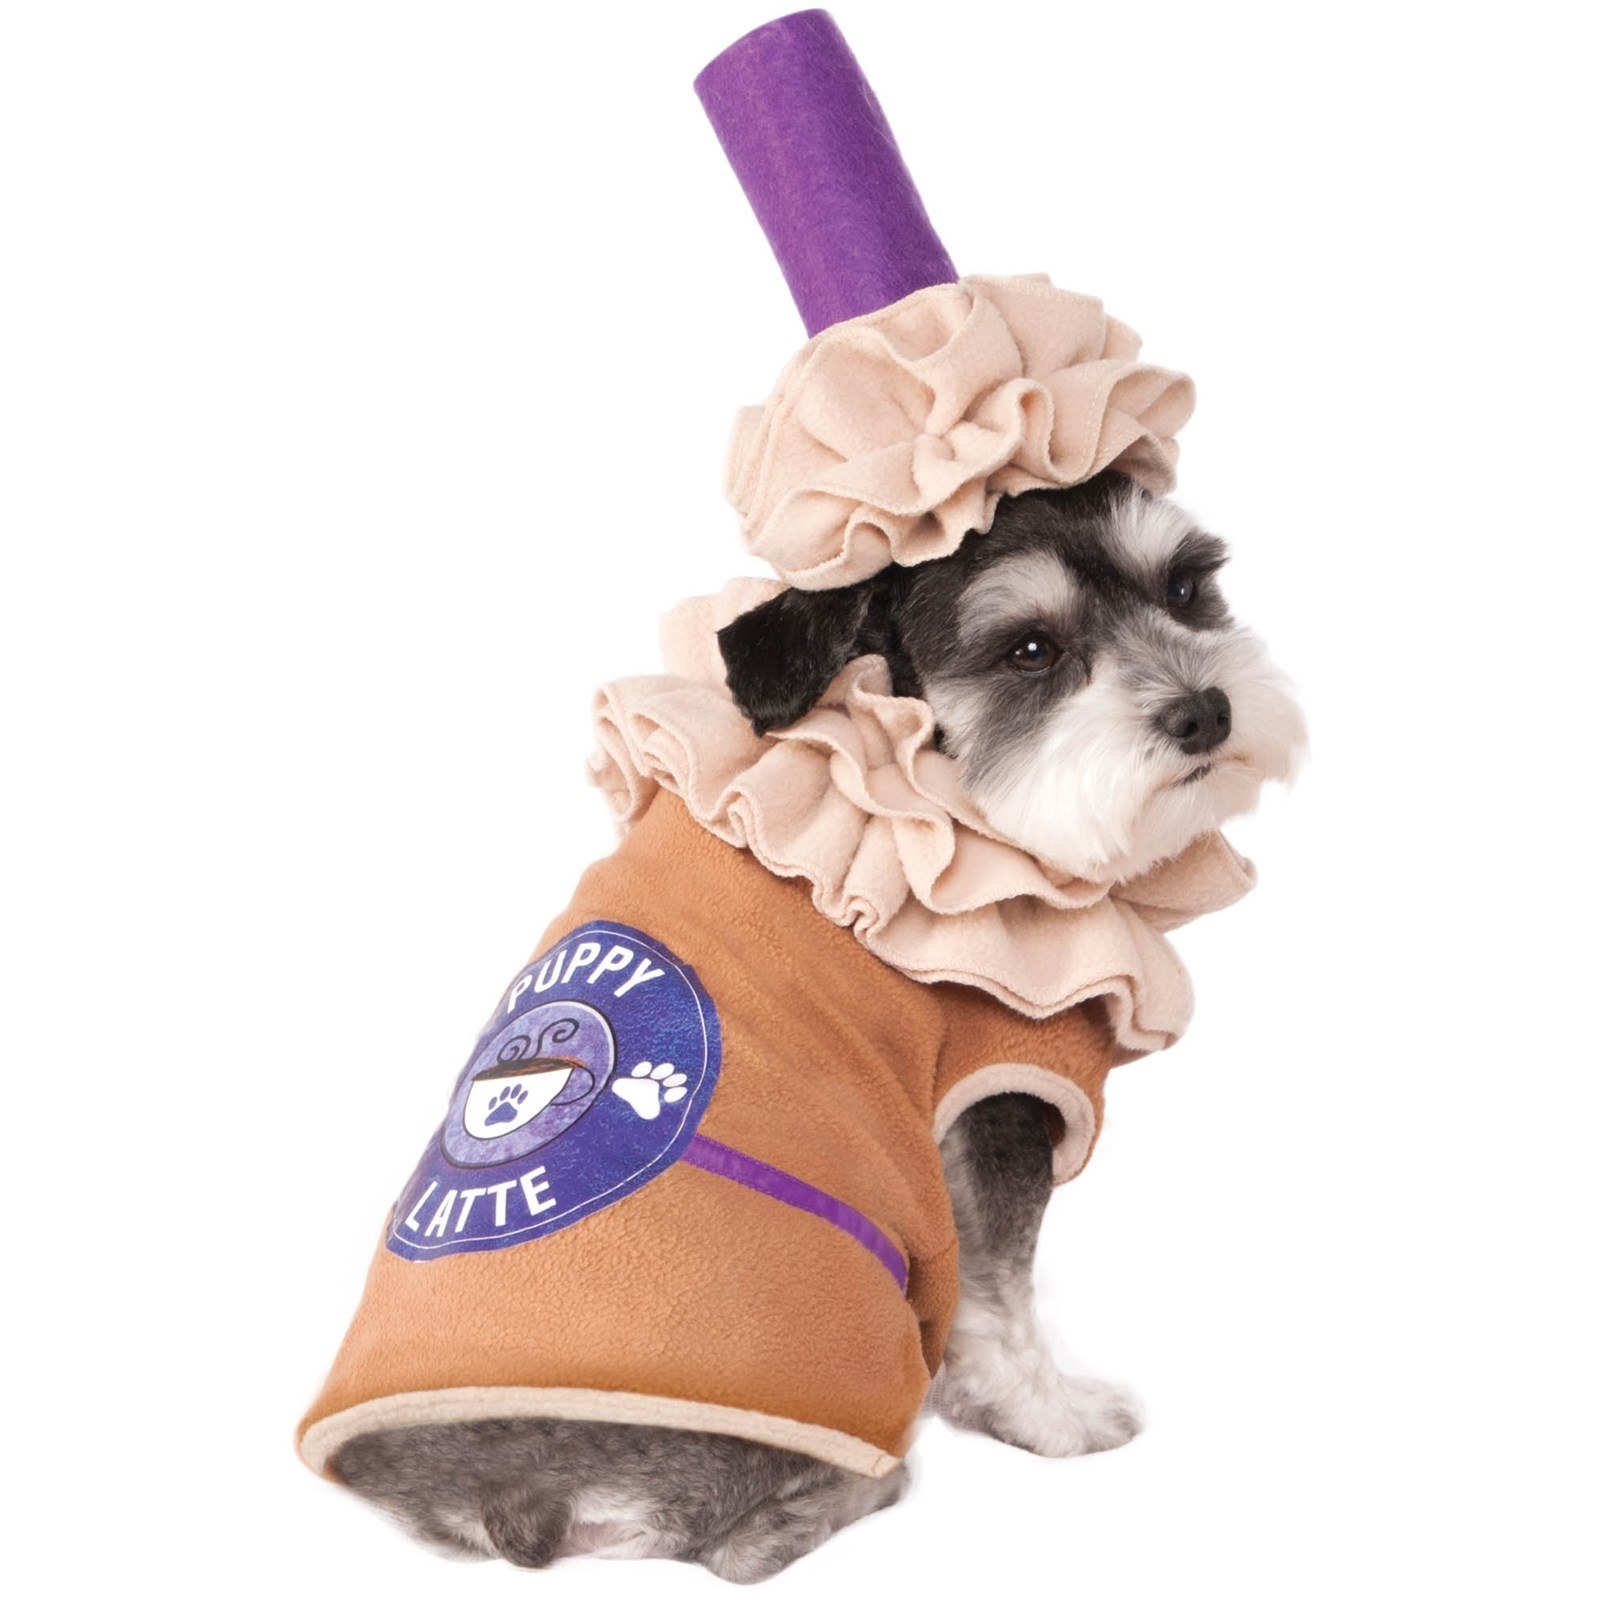 medium sized dog wearing the puppy latte costume